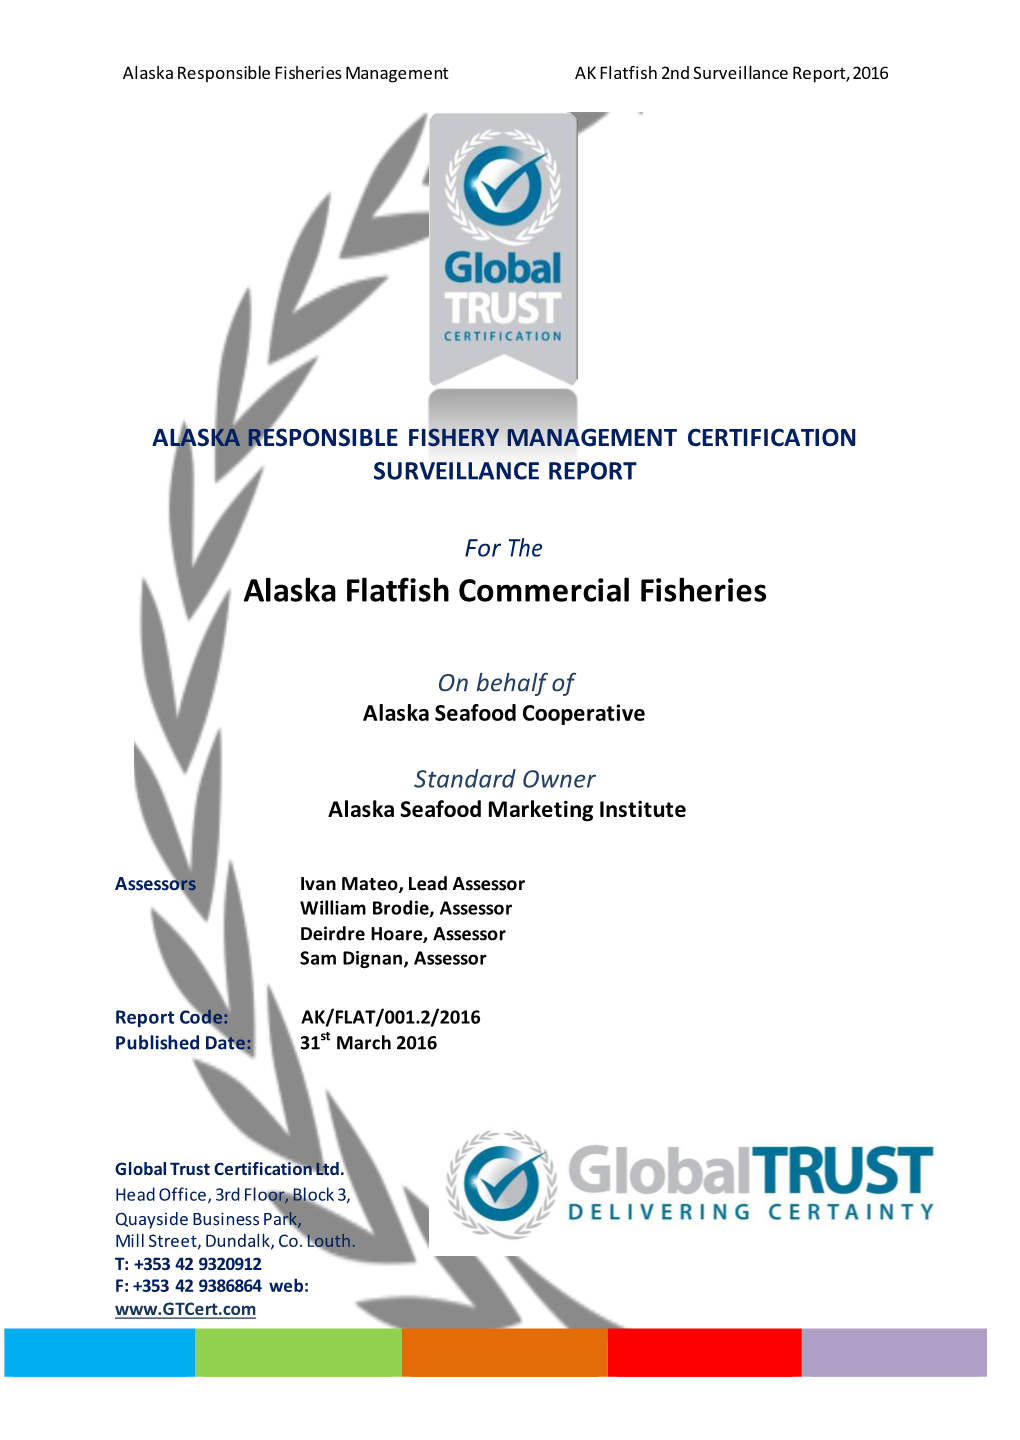 Alaska Flatfish Commercial Fisheries